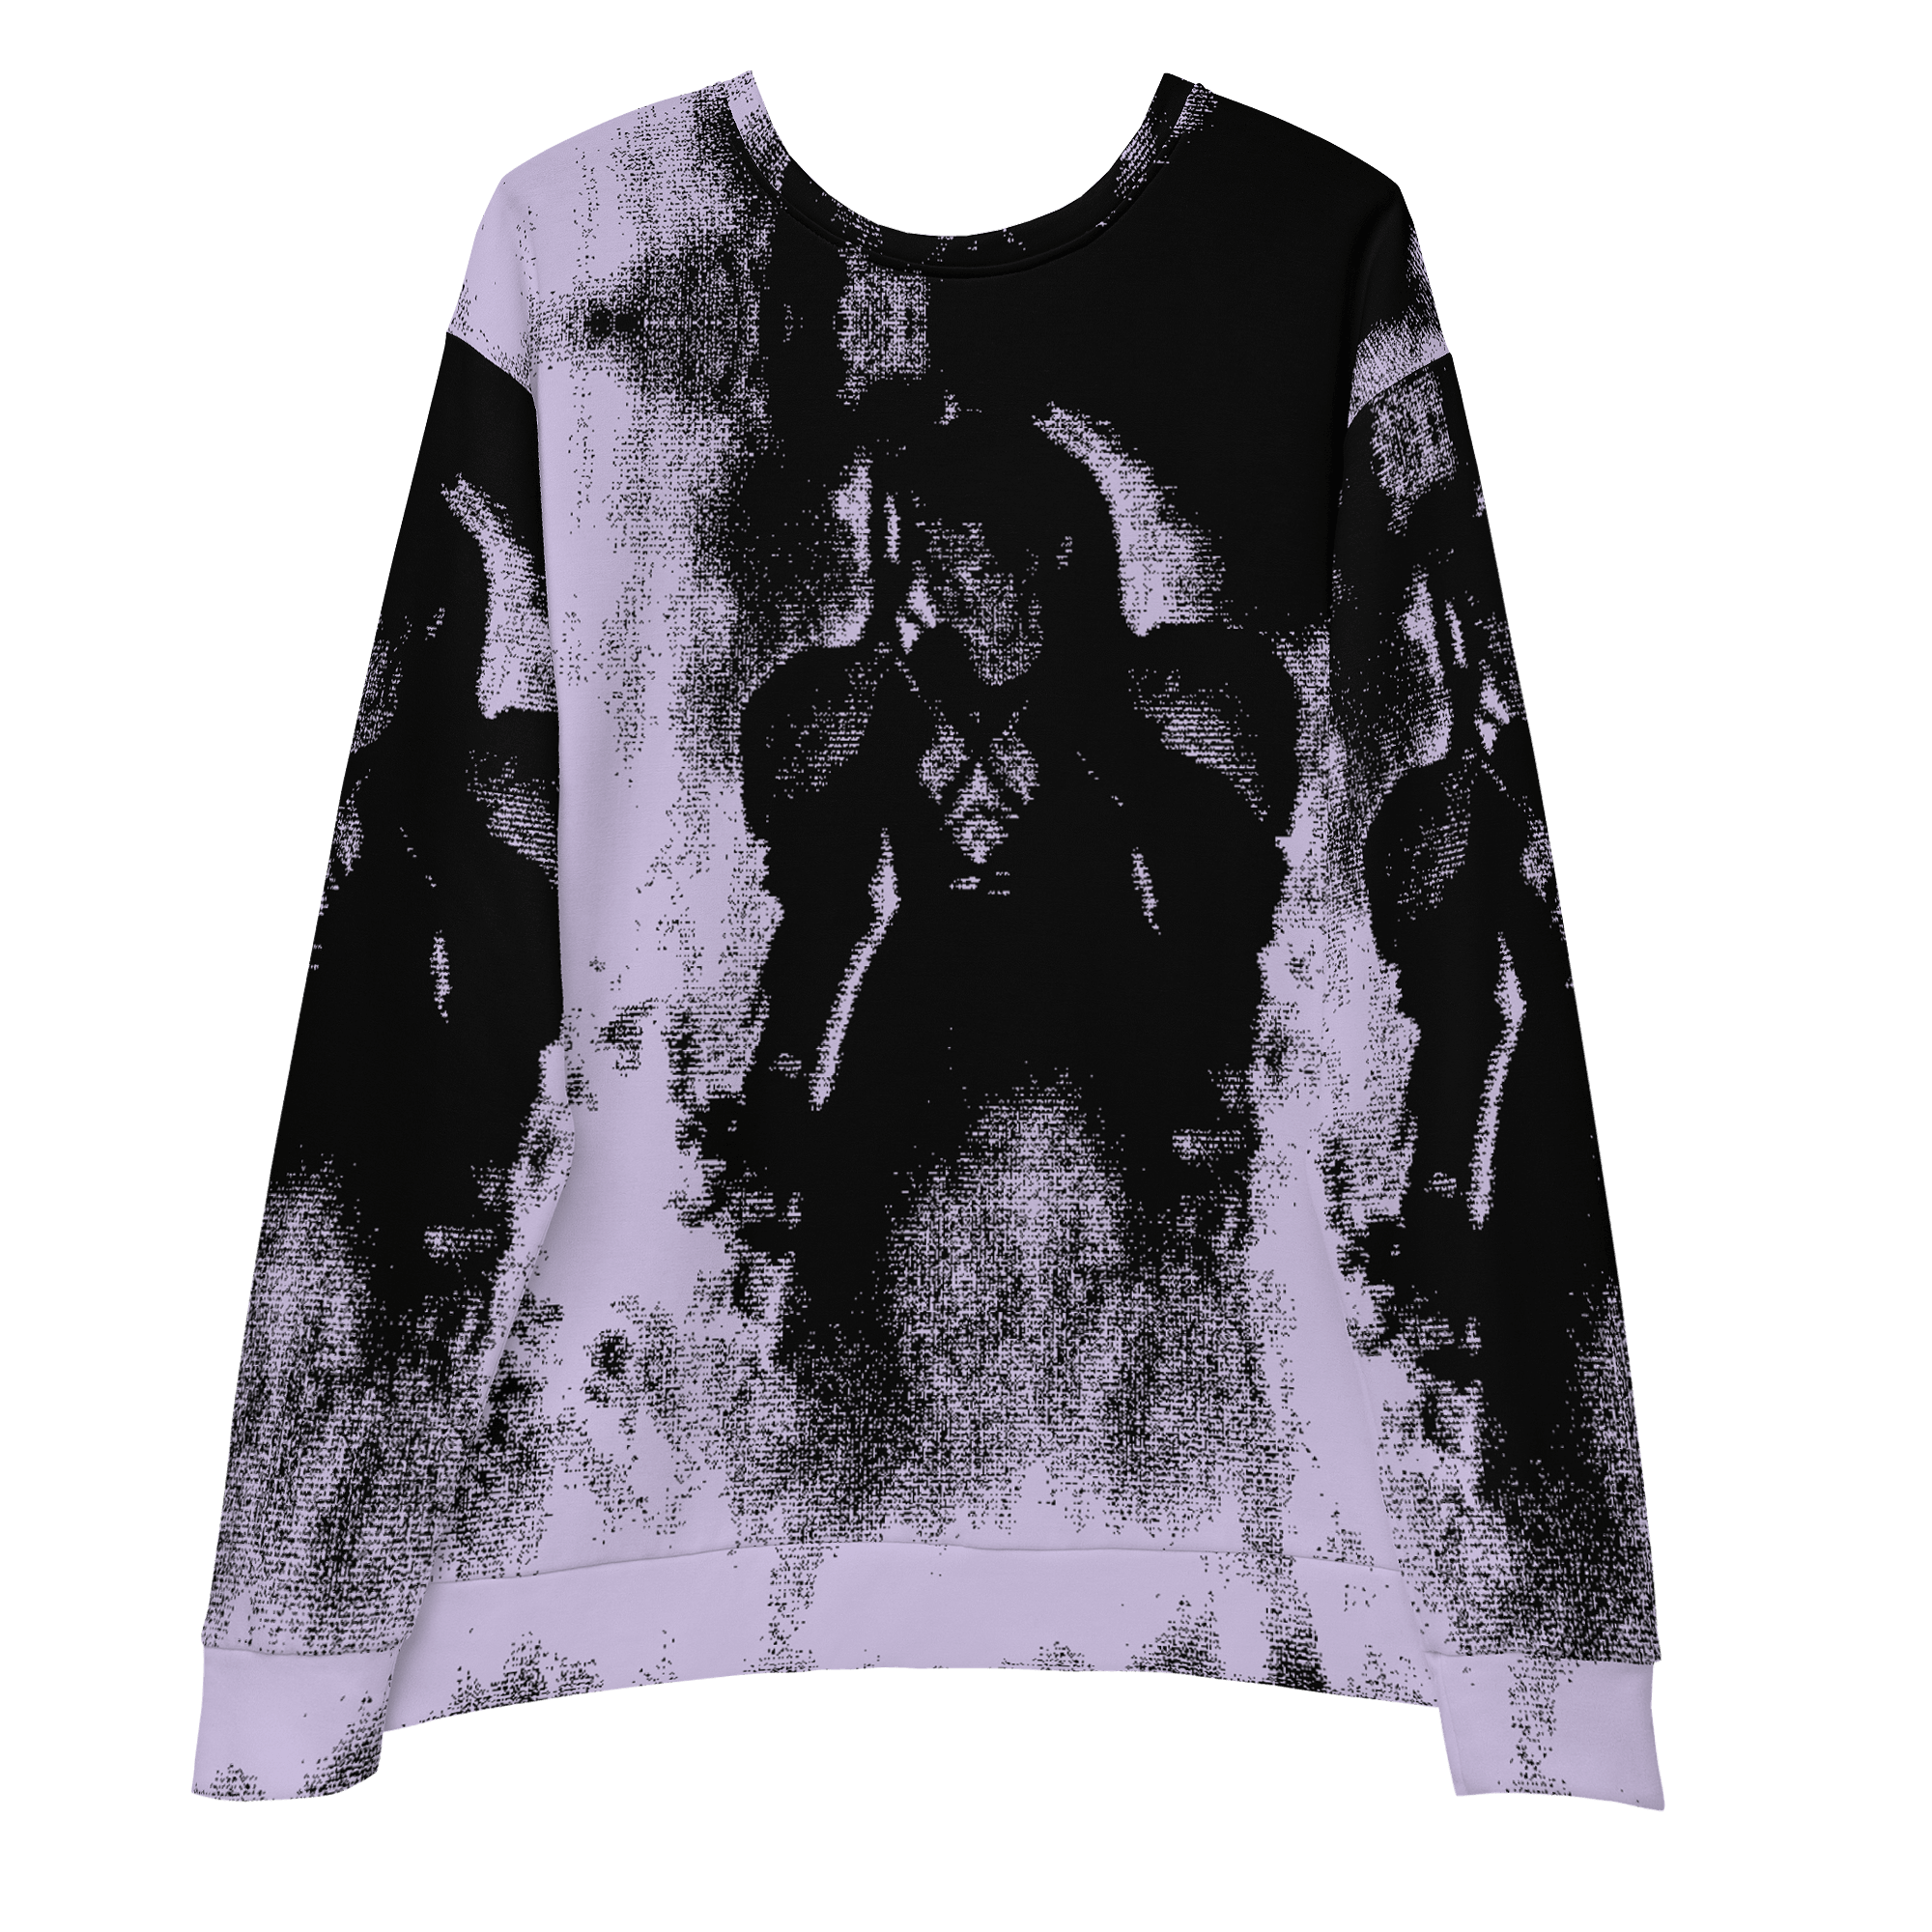 I miss me 2® Unisex Sweatshirt (7 pieces for sale) - Kikillo Club